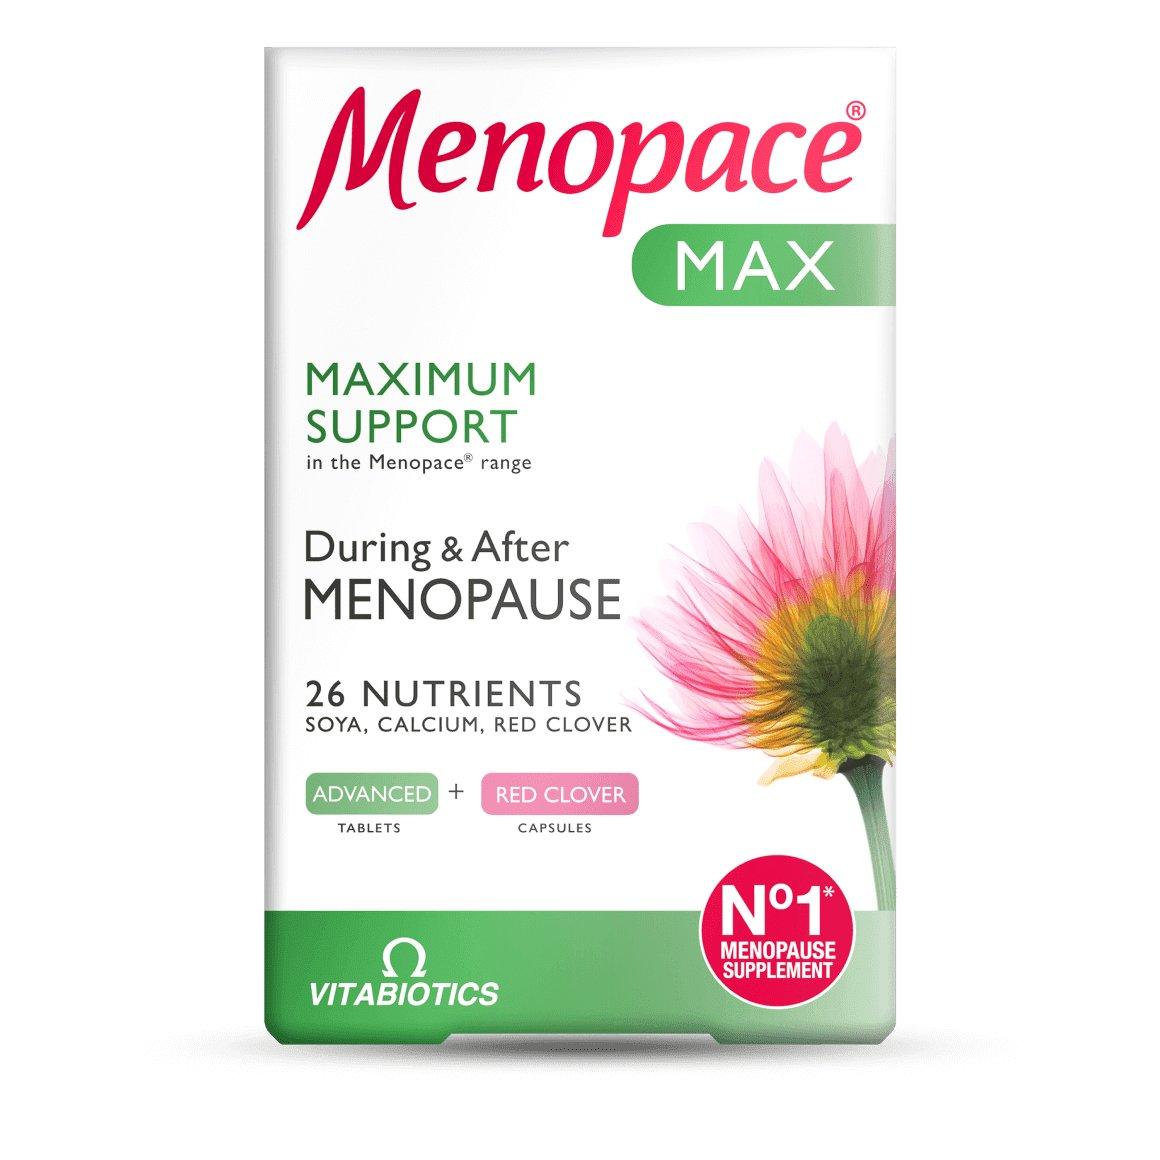 Menopace Max - Rightangled